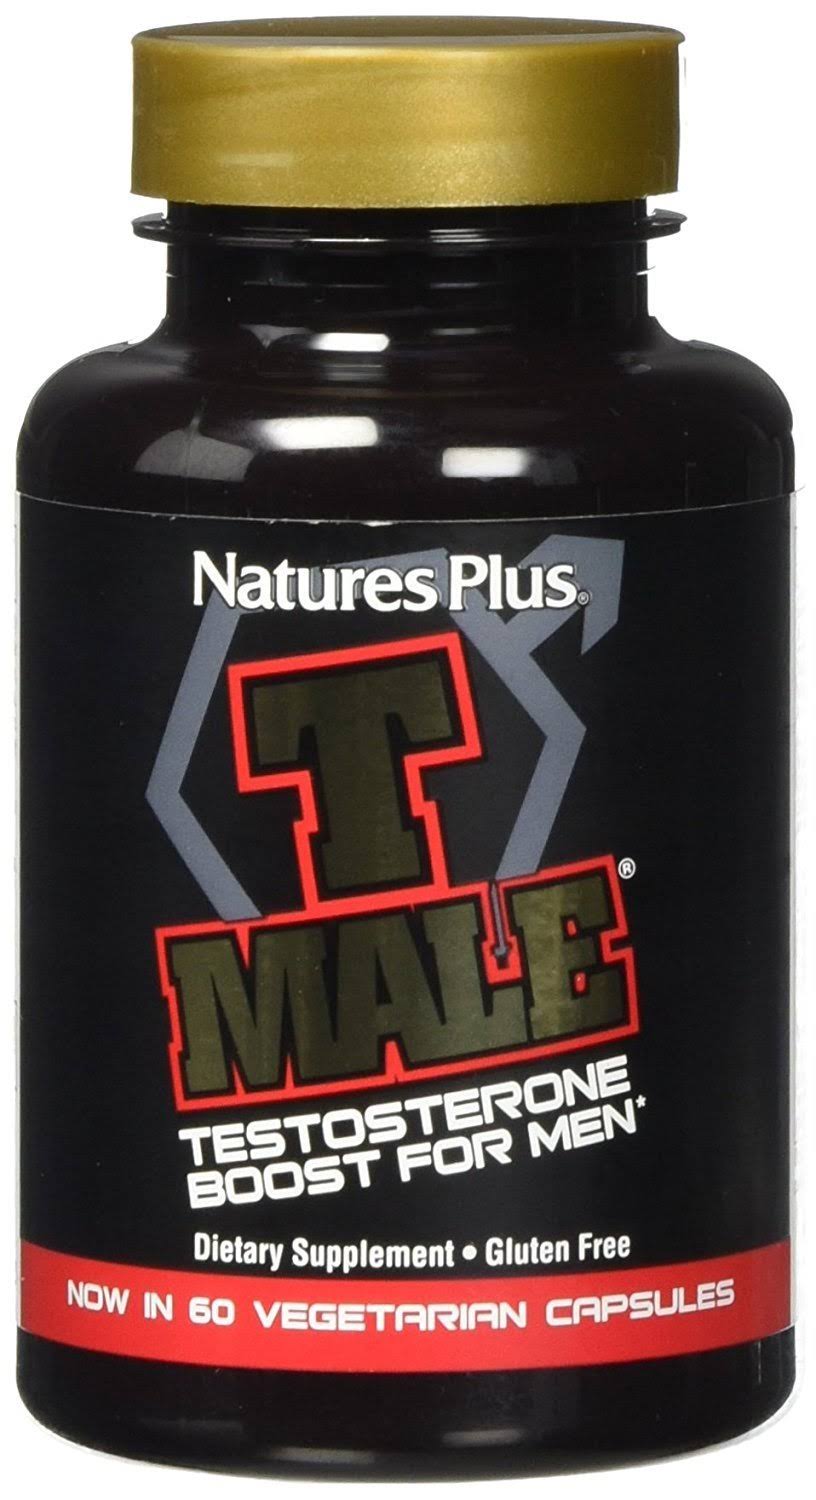 Nature's Plus T Male Testosterone Boost For Men - 60 Capsules